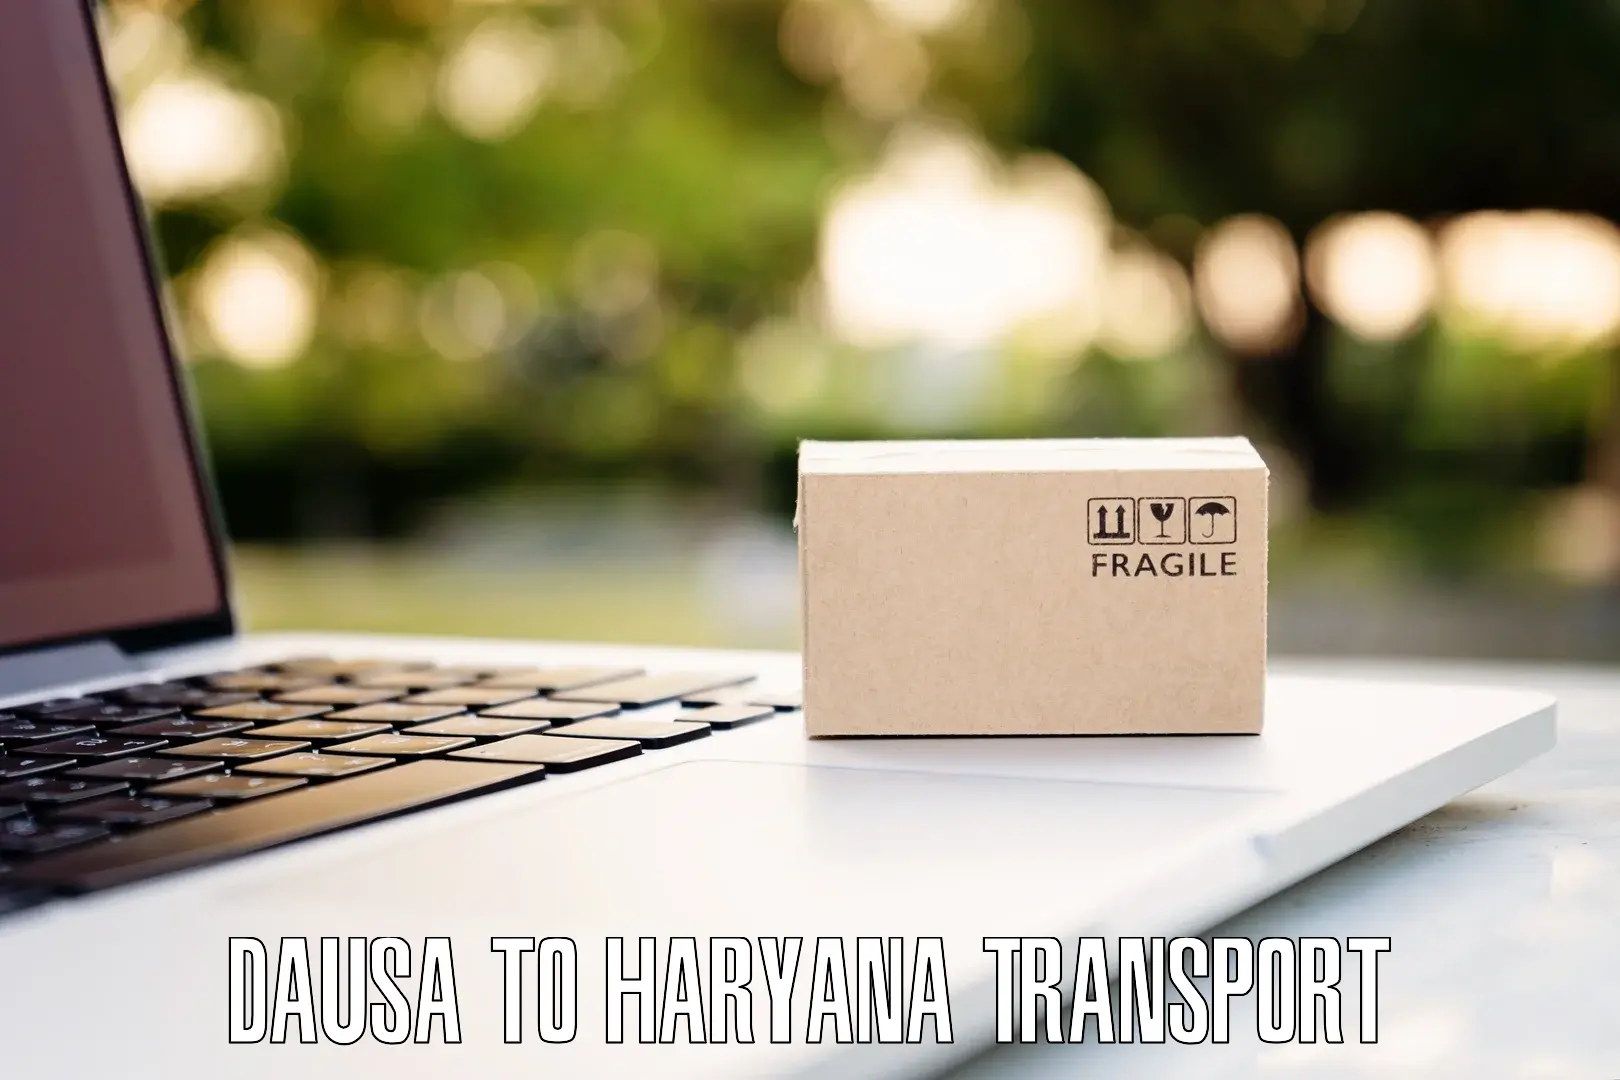 Delivery service Dausa to Bilaspur Haryana